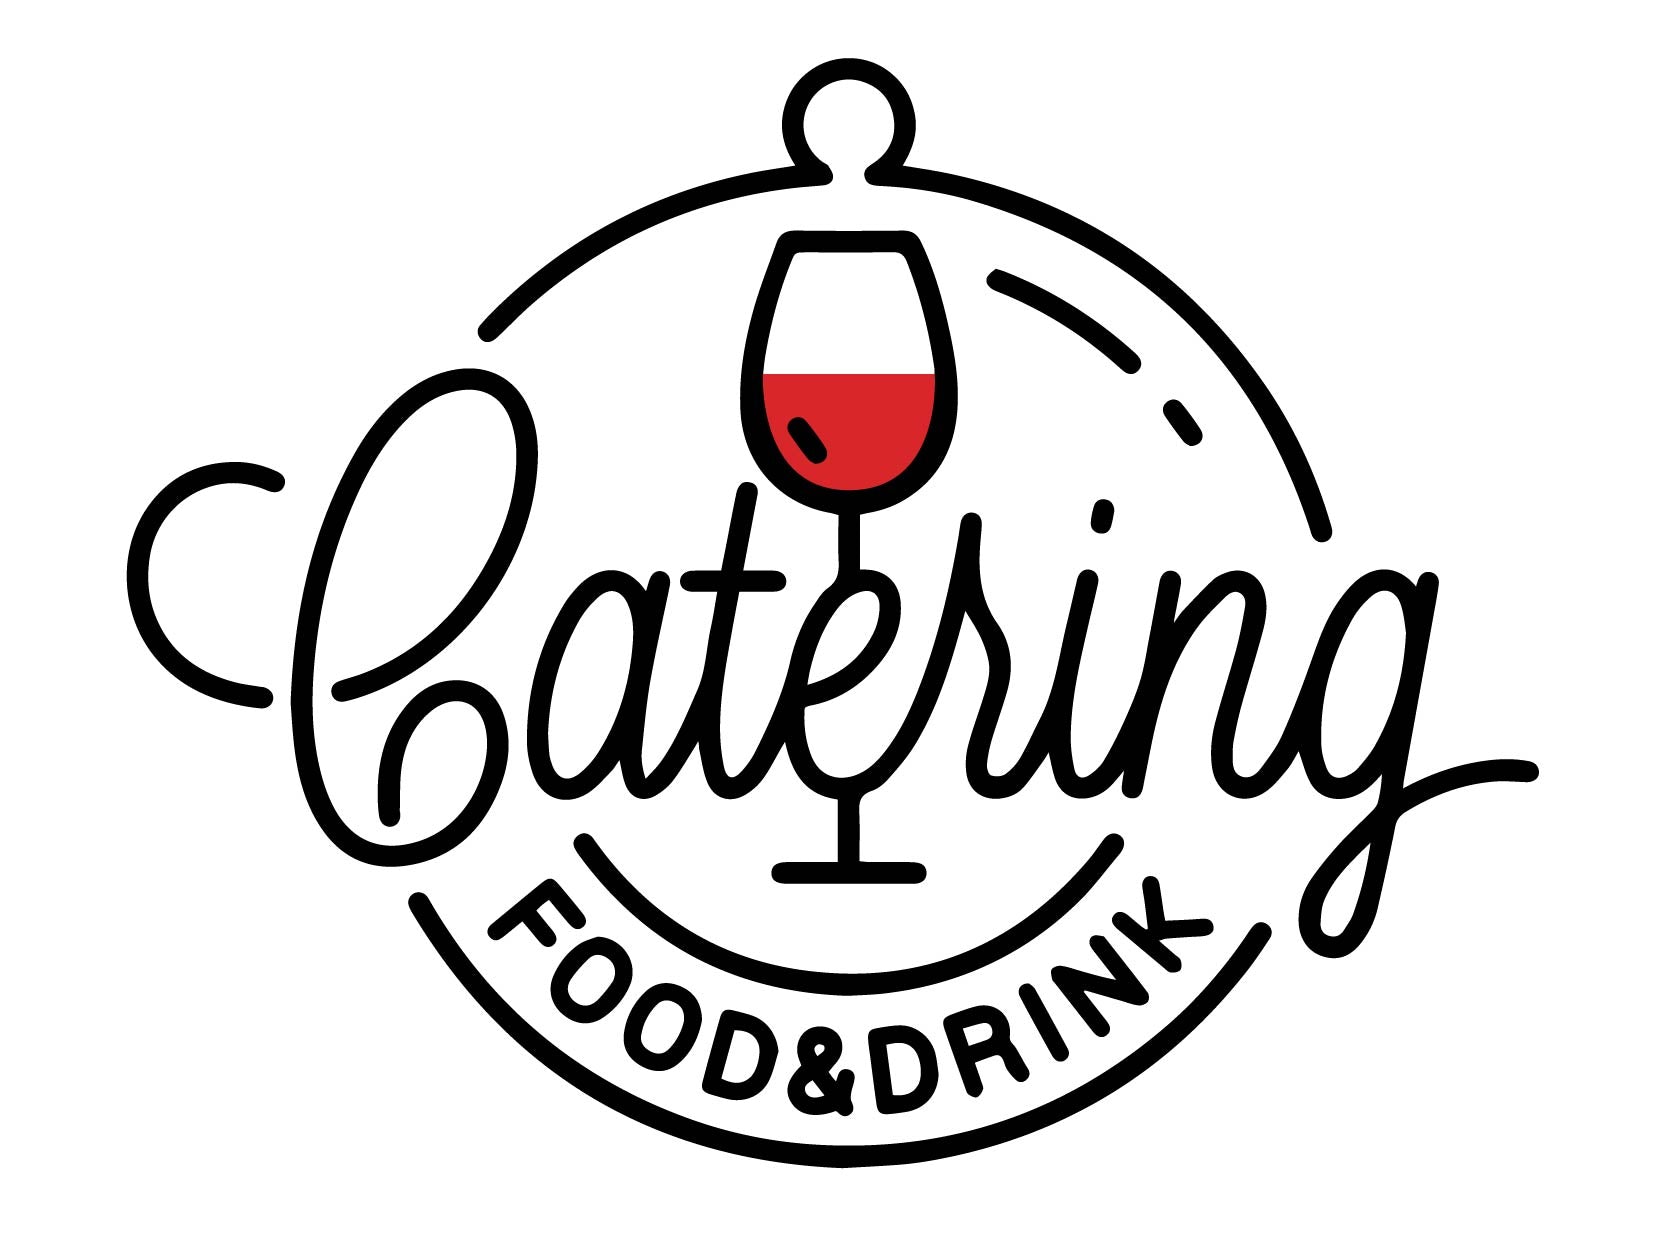 Pegatina logo catering minimalista